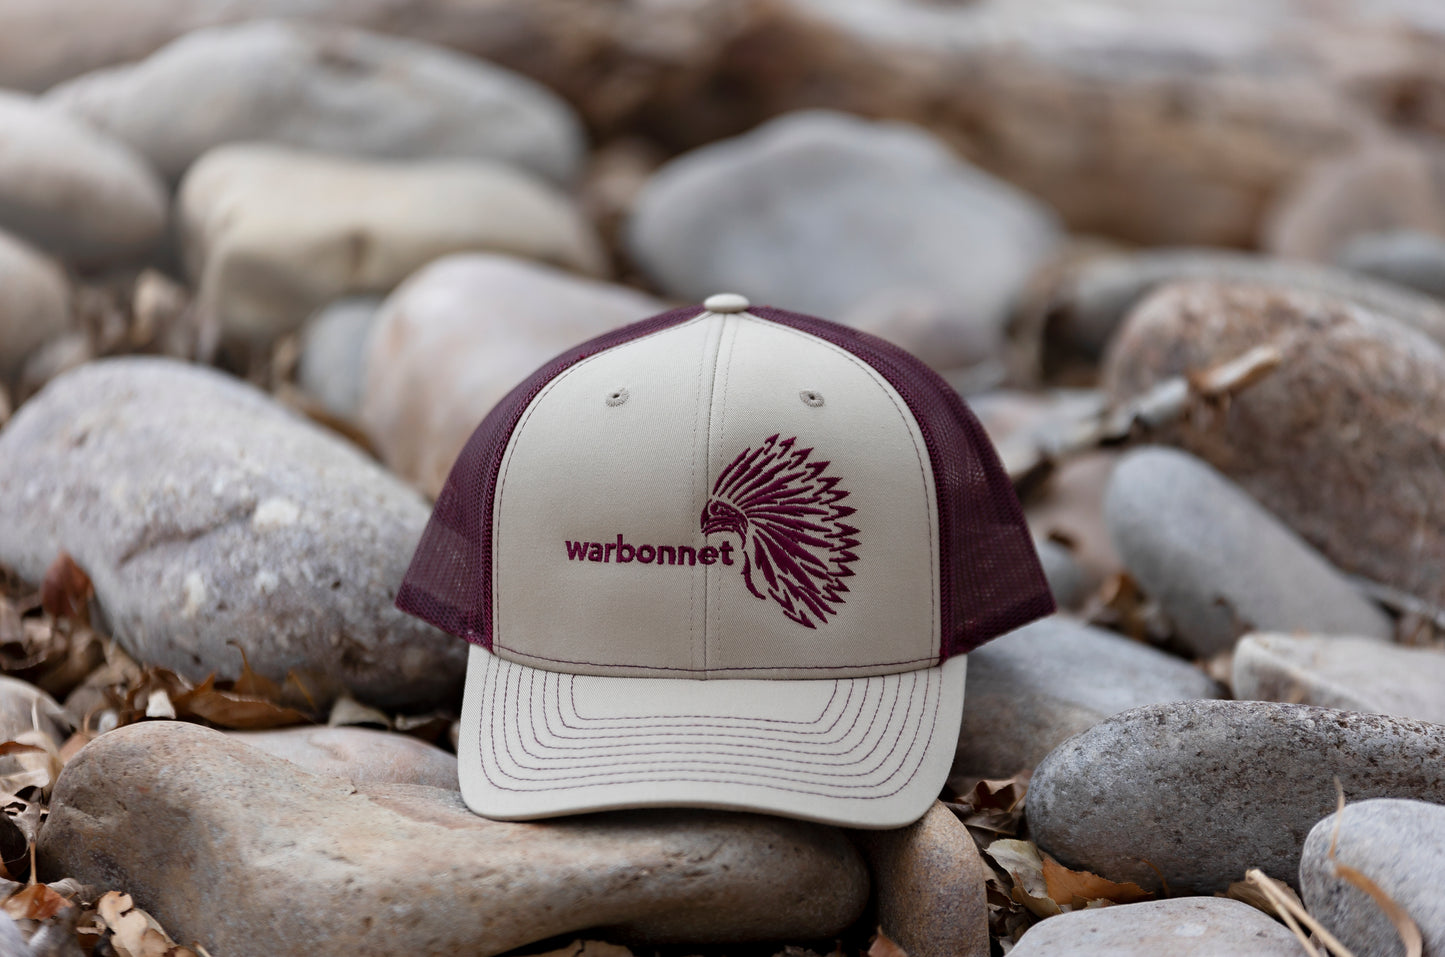 warbonnet trucker hat - Khaki / Burgundy